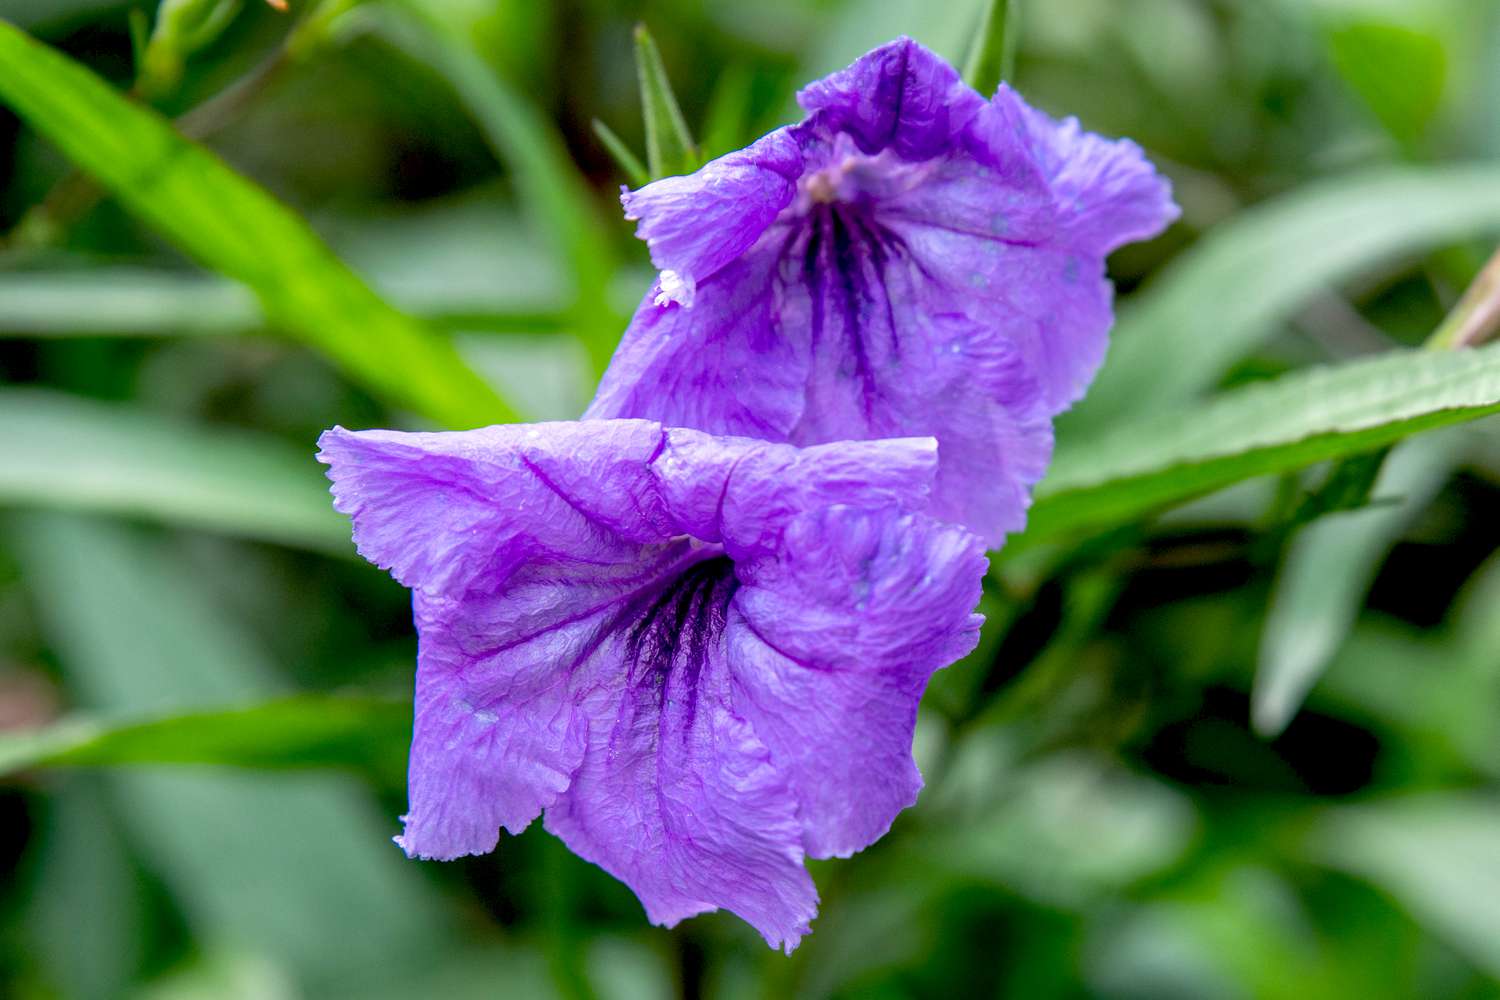 Primer plano de flores de petunia mexicana con pétalos de color púrpura intenso